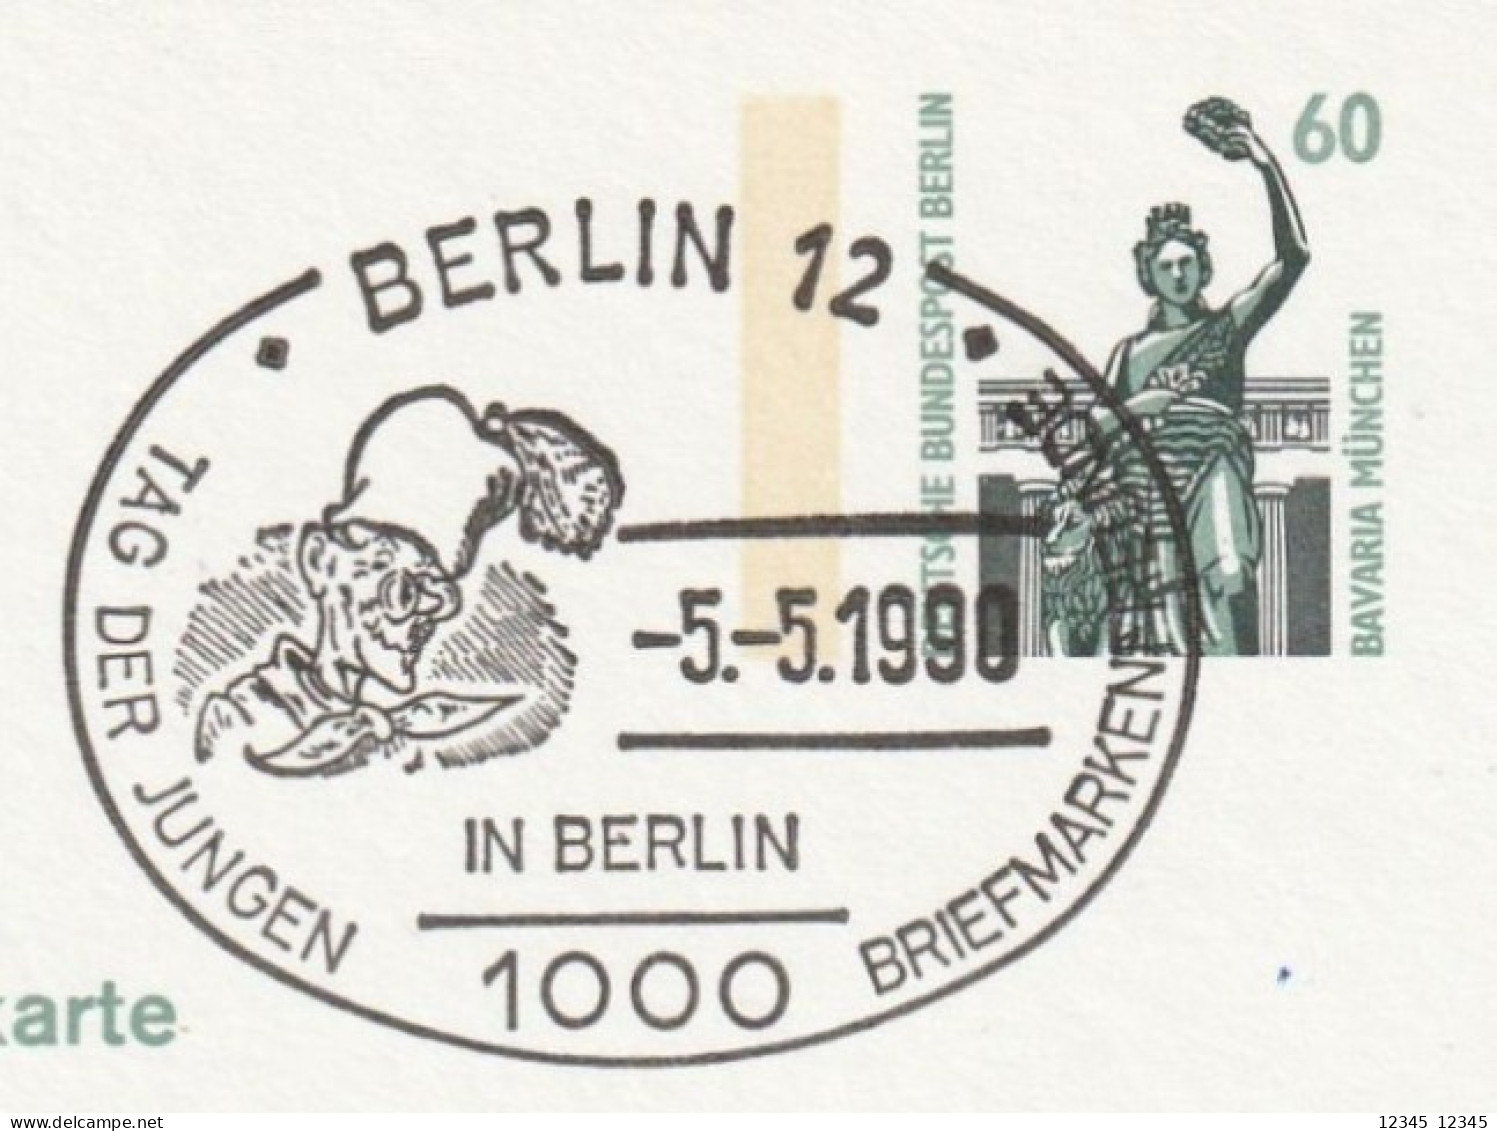 Duitsland 1990, Berlin Tag Der Jungen Briefmarkenfreunde (Young Stamp Enthusiasts' Day) - Cartoline Illustrate - Usati